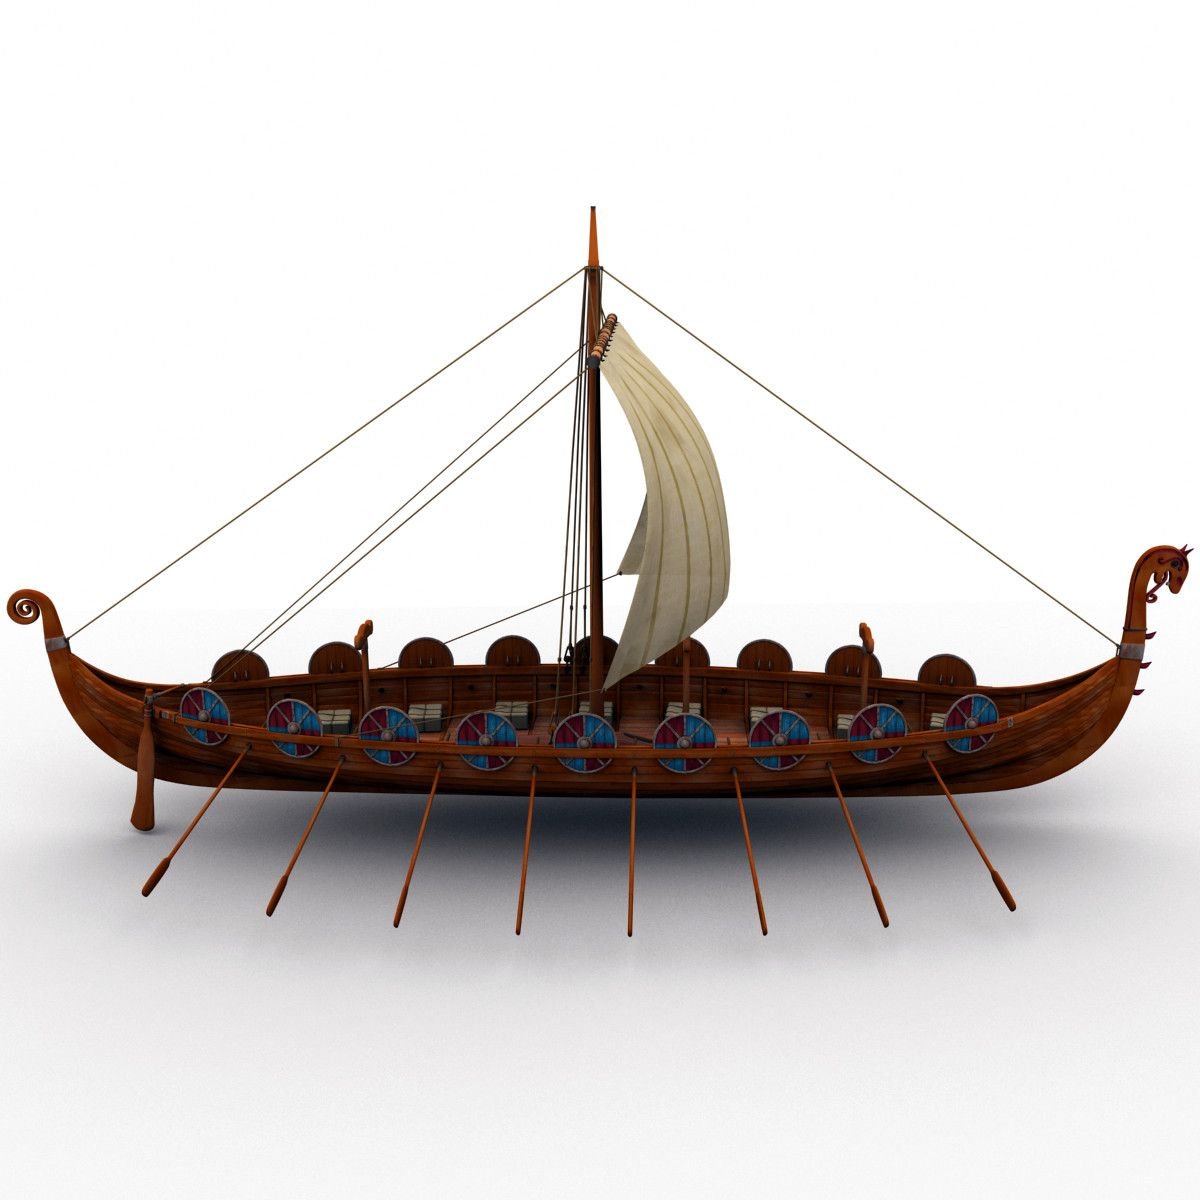 Три ладьи. Ладья Драккар викингов. Лодка викингов дракар. Корабль викингов Драккар 10 век. Модель корабля Viking ship Drakkar 3d модель.